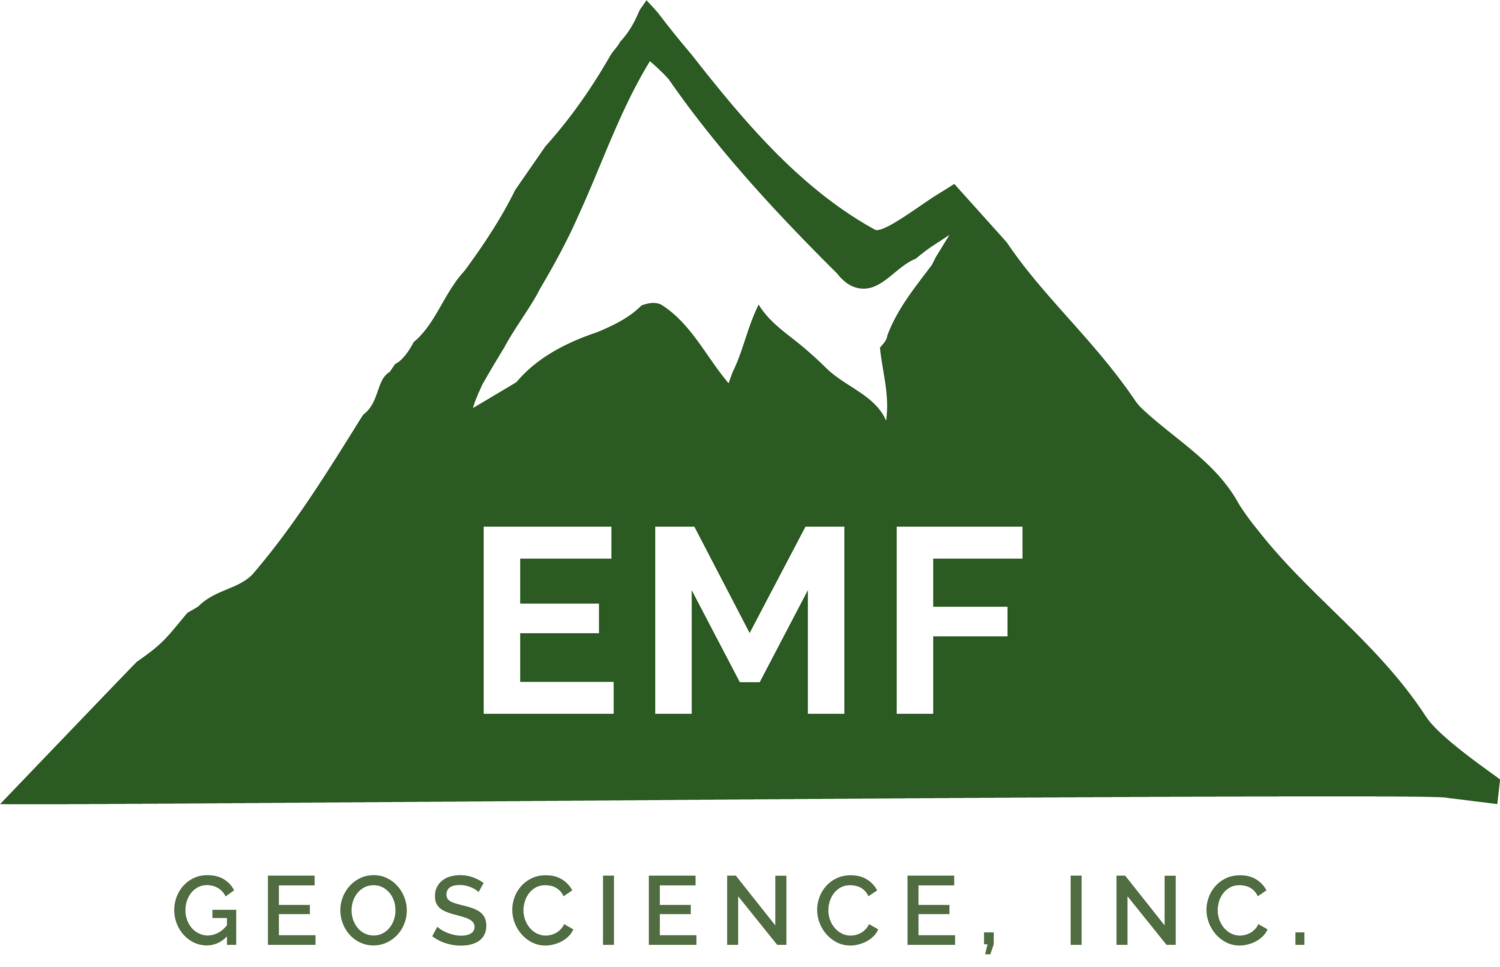 EMF Geoscience, Inc.